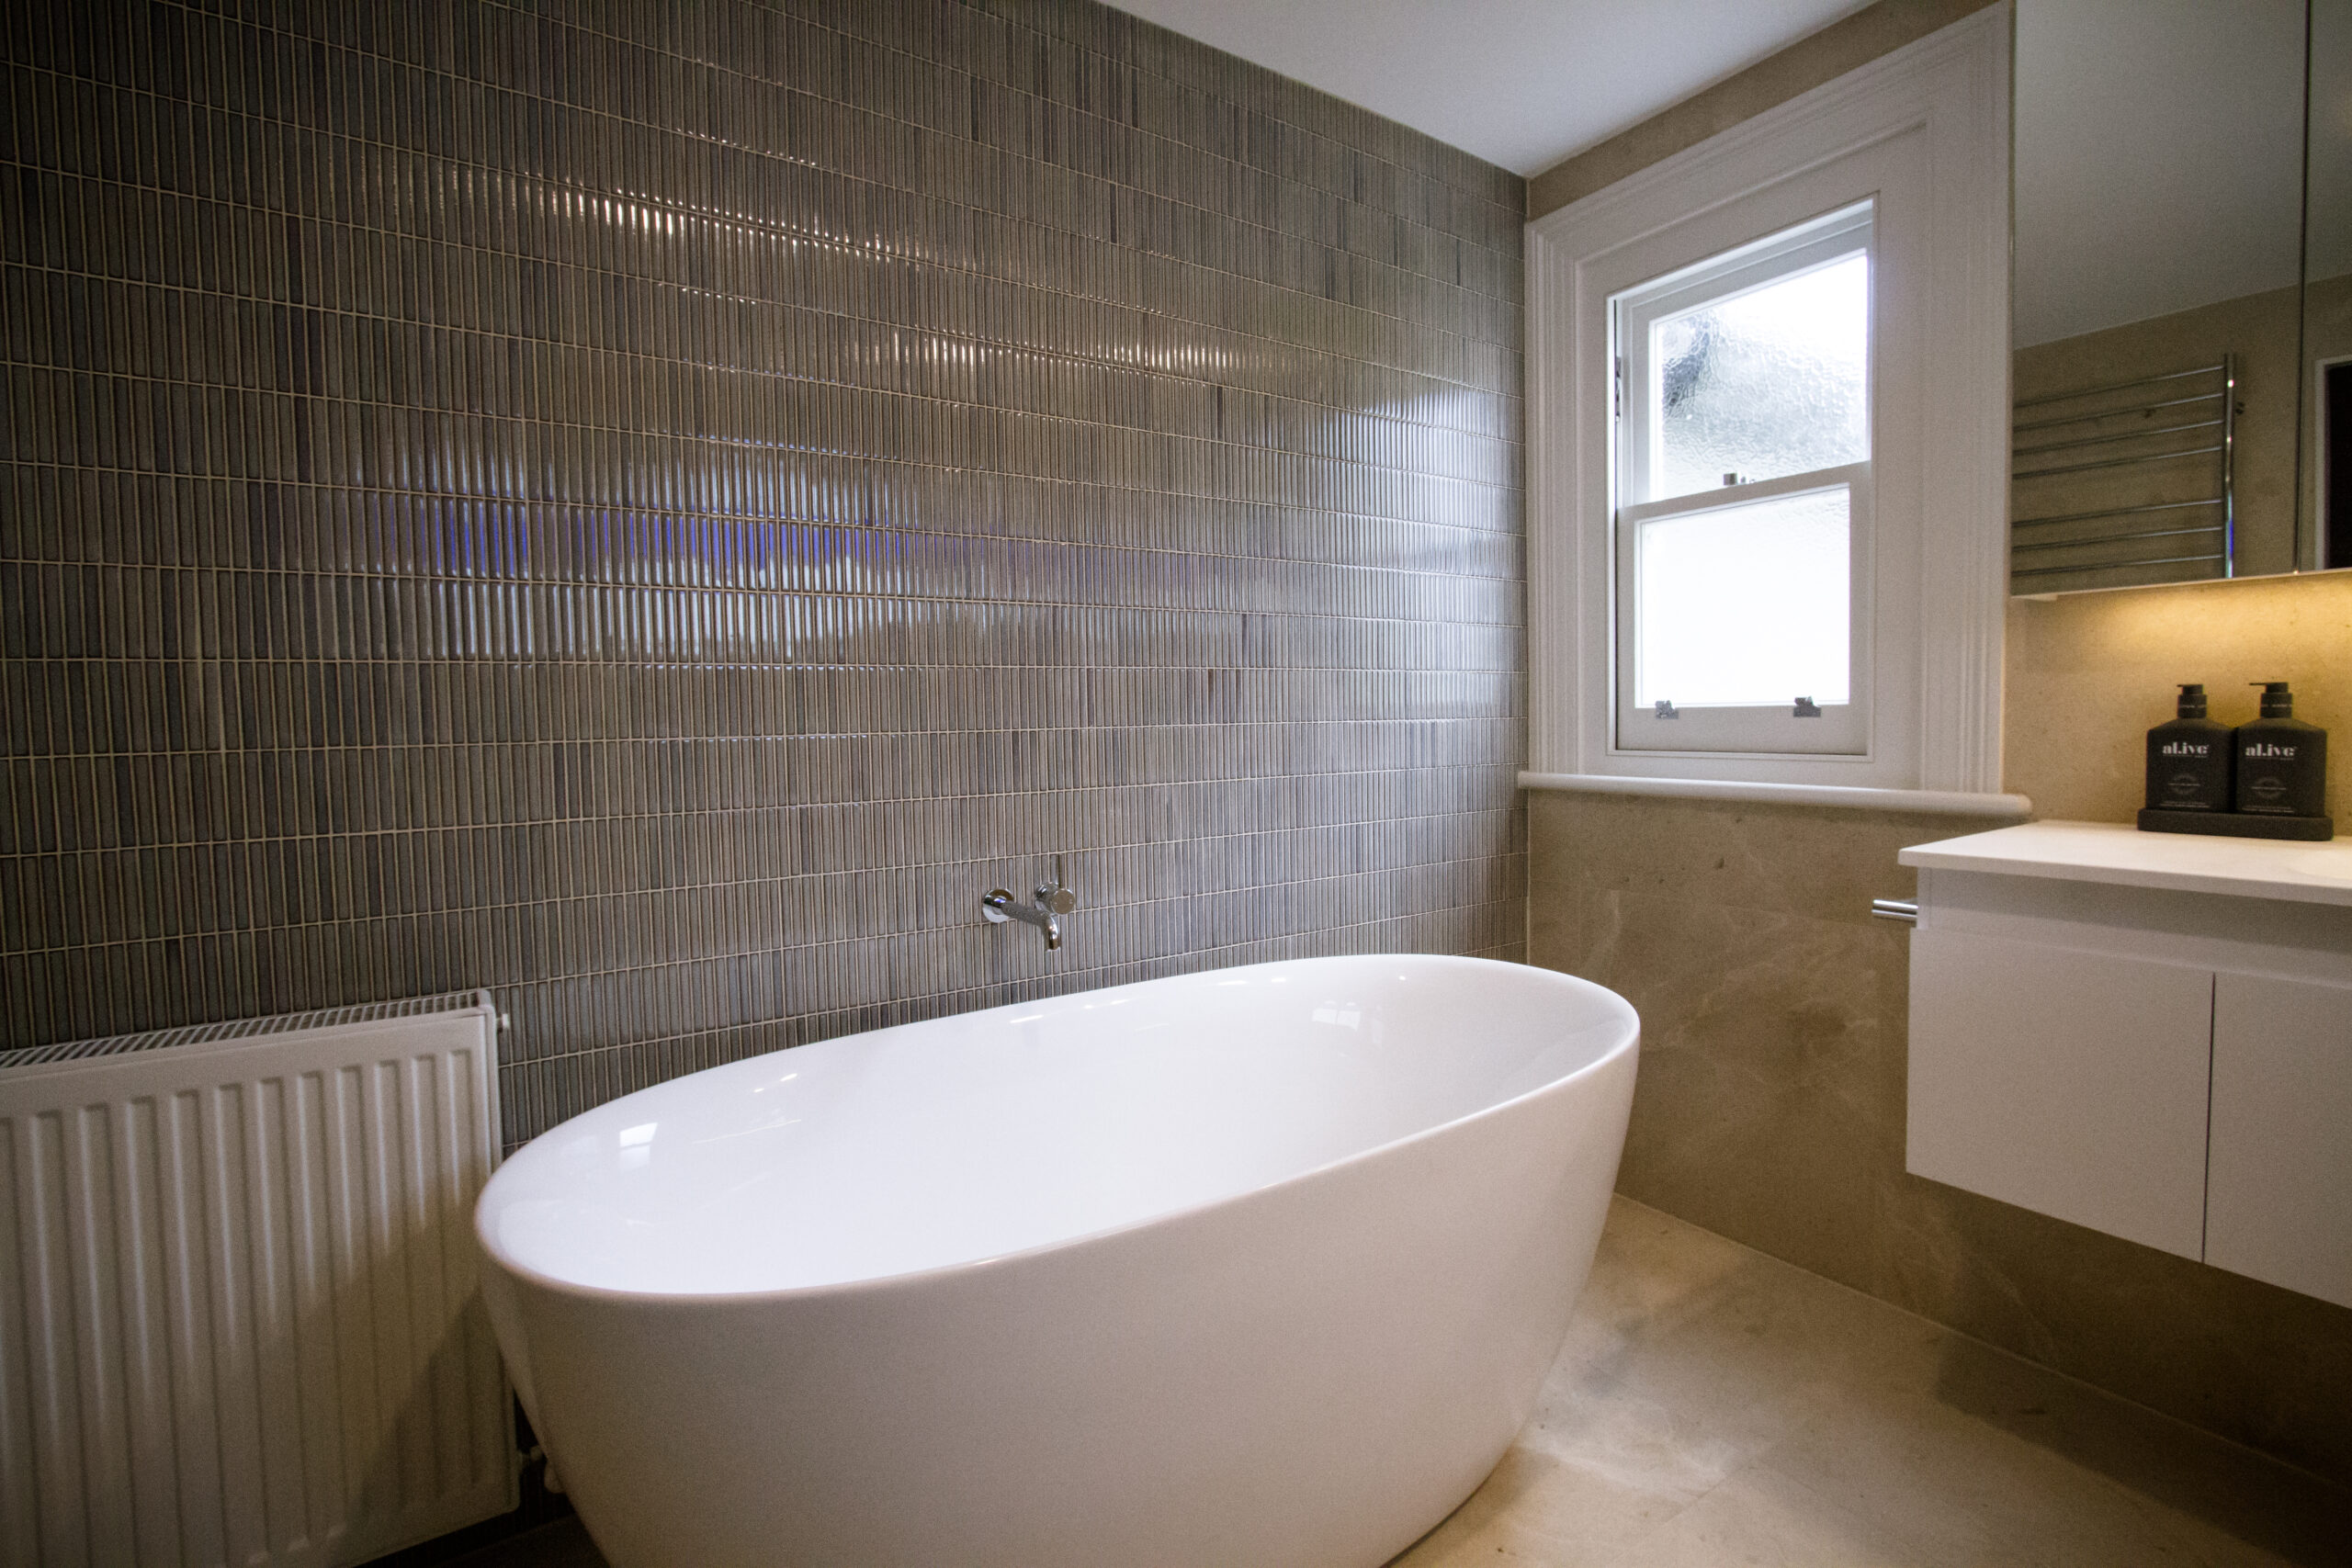 Classic bathroom design in Carlton using Rocca Blanca Honed Limestone tiles